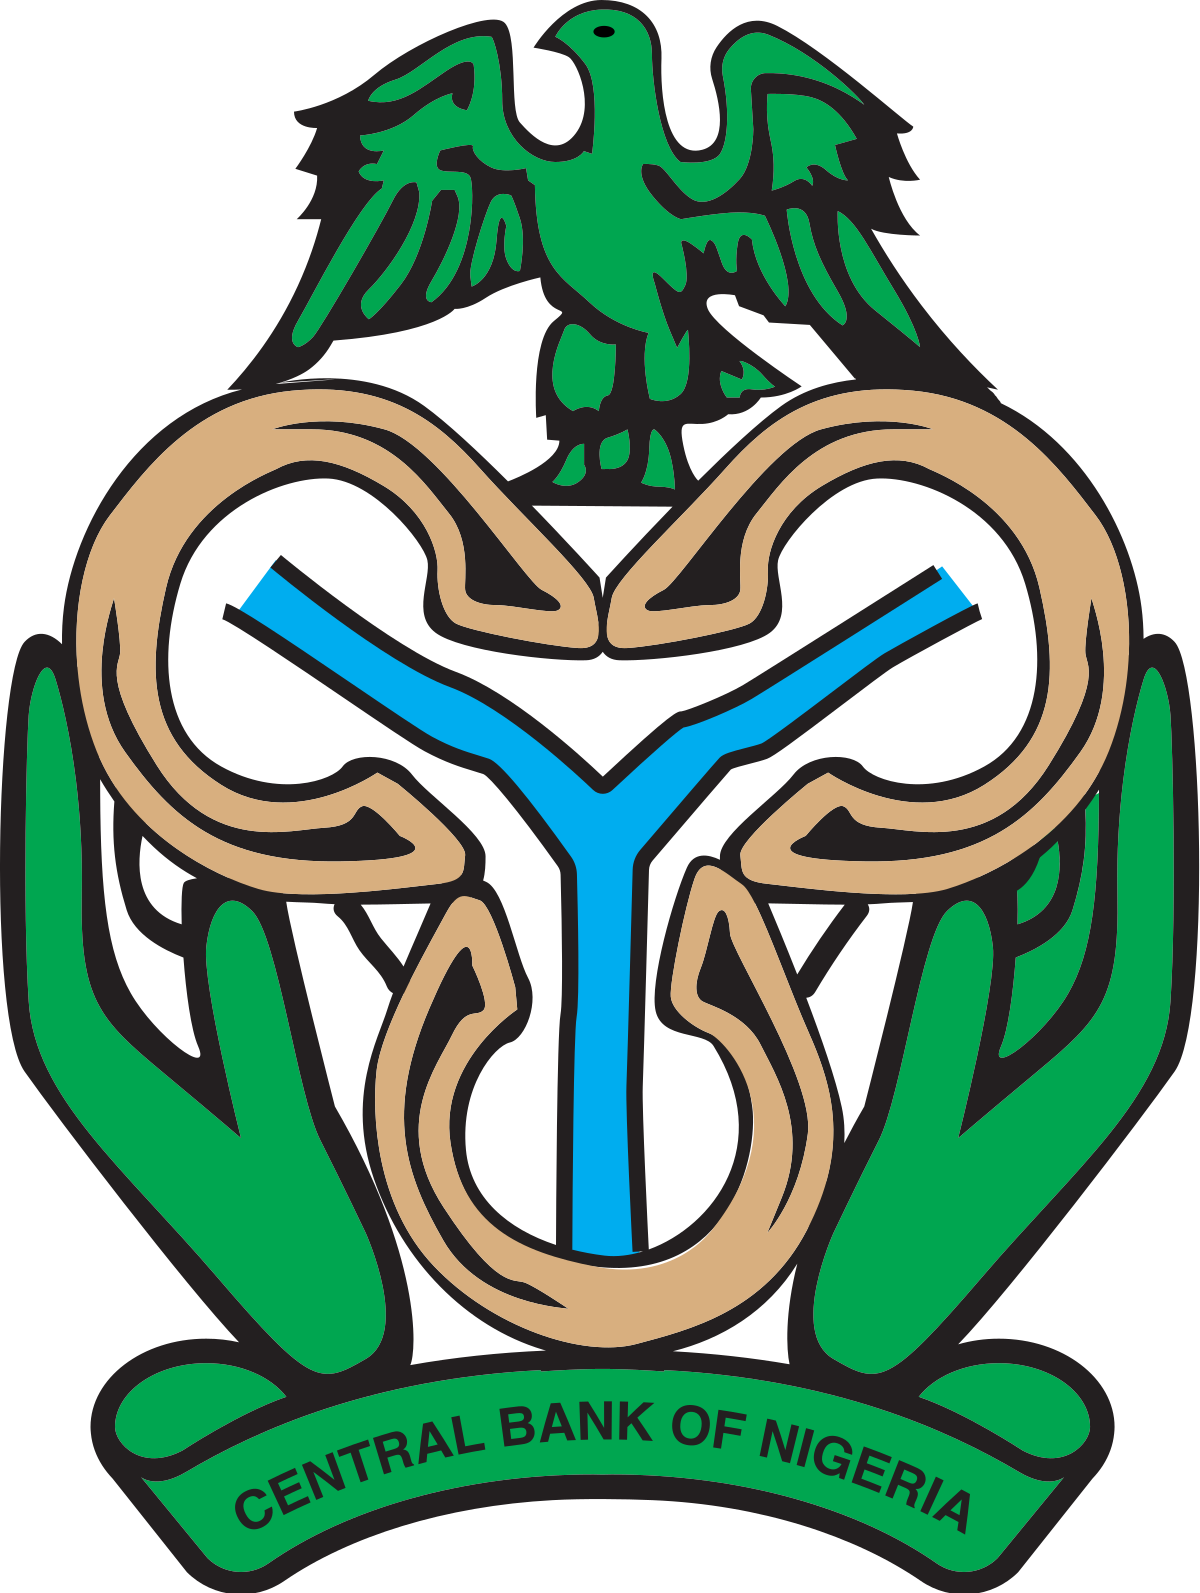 Central Bank of Nigeria logo